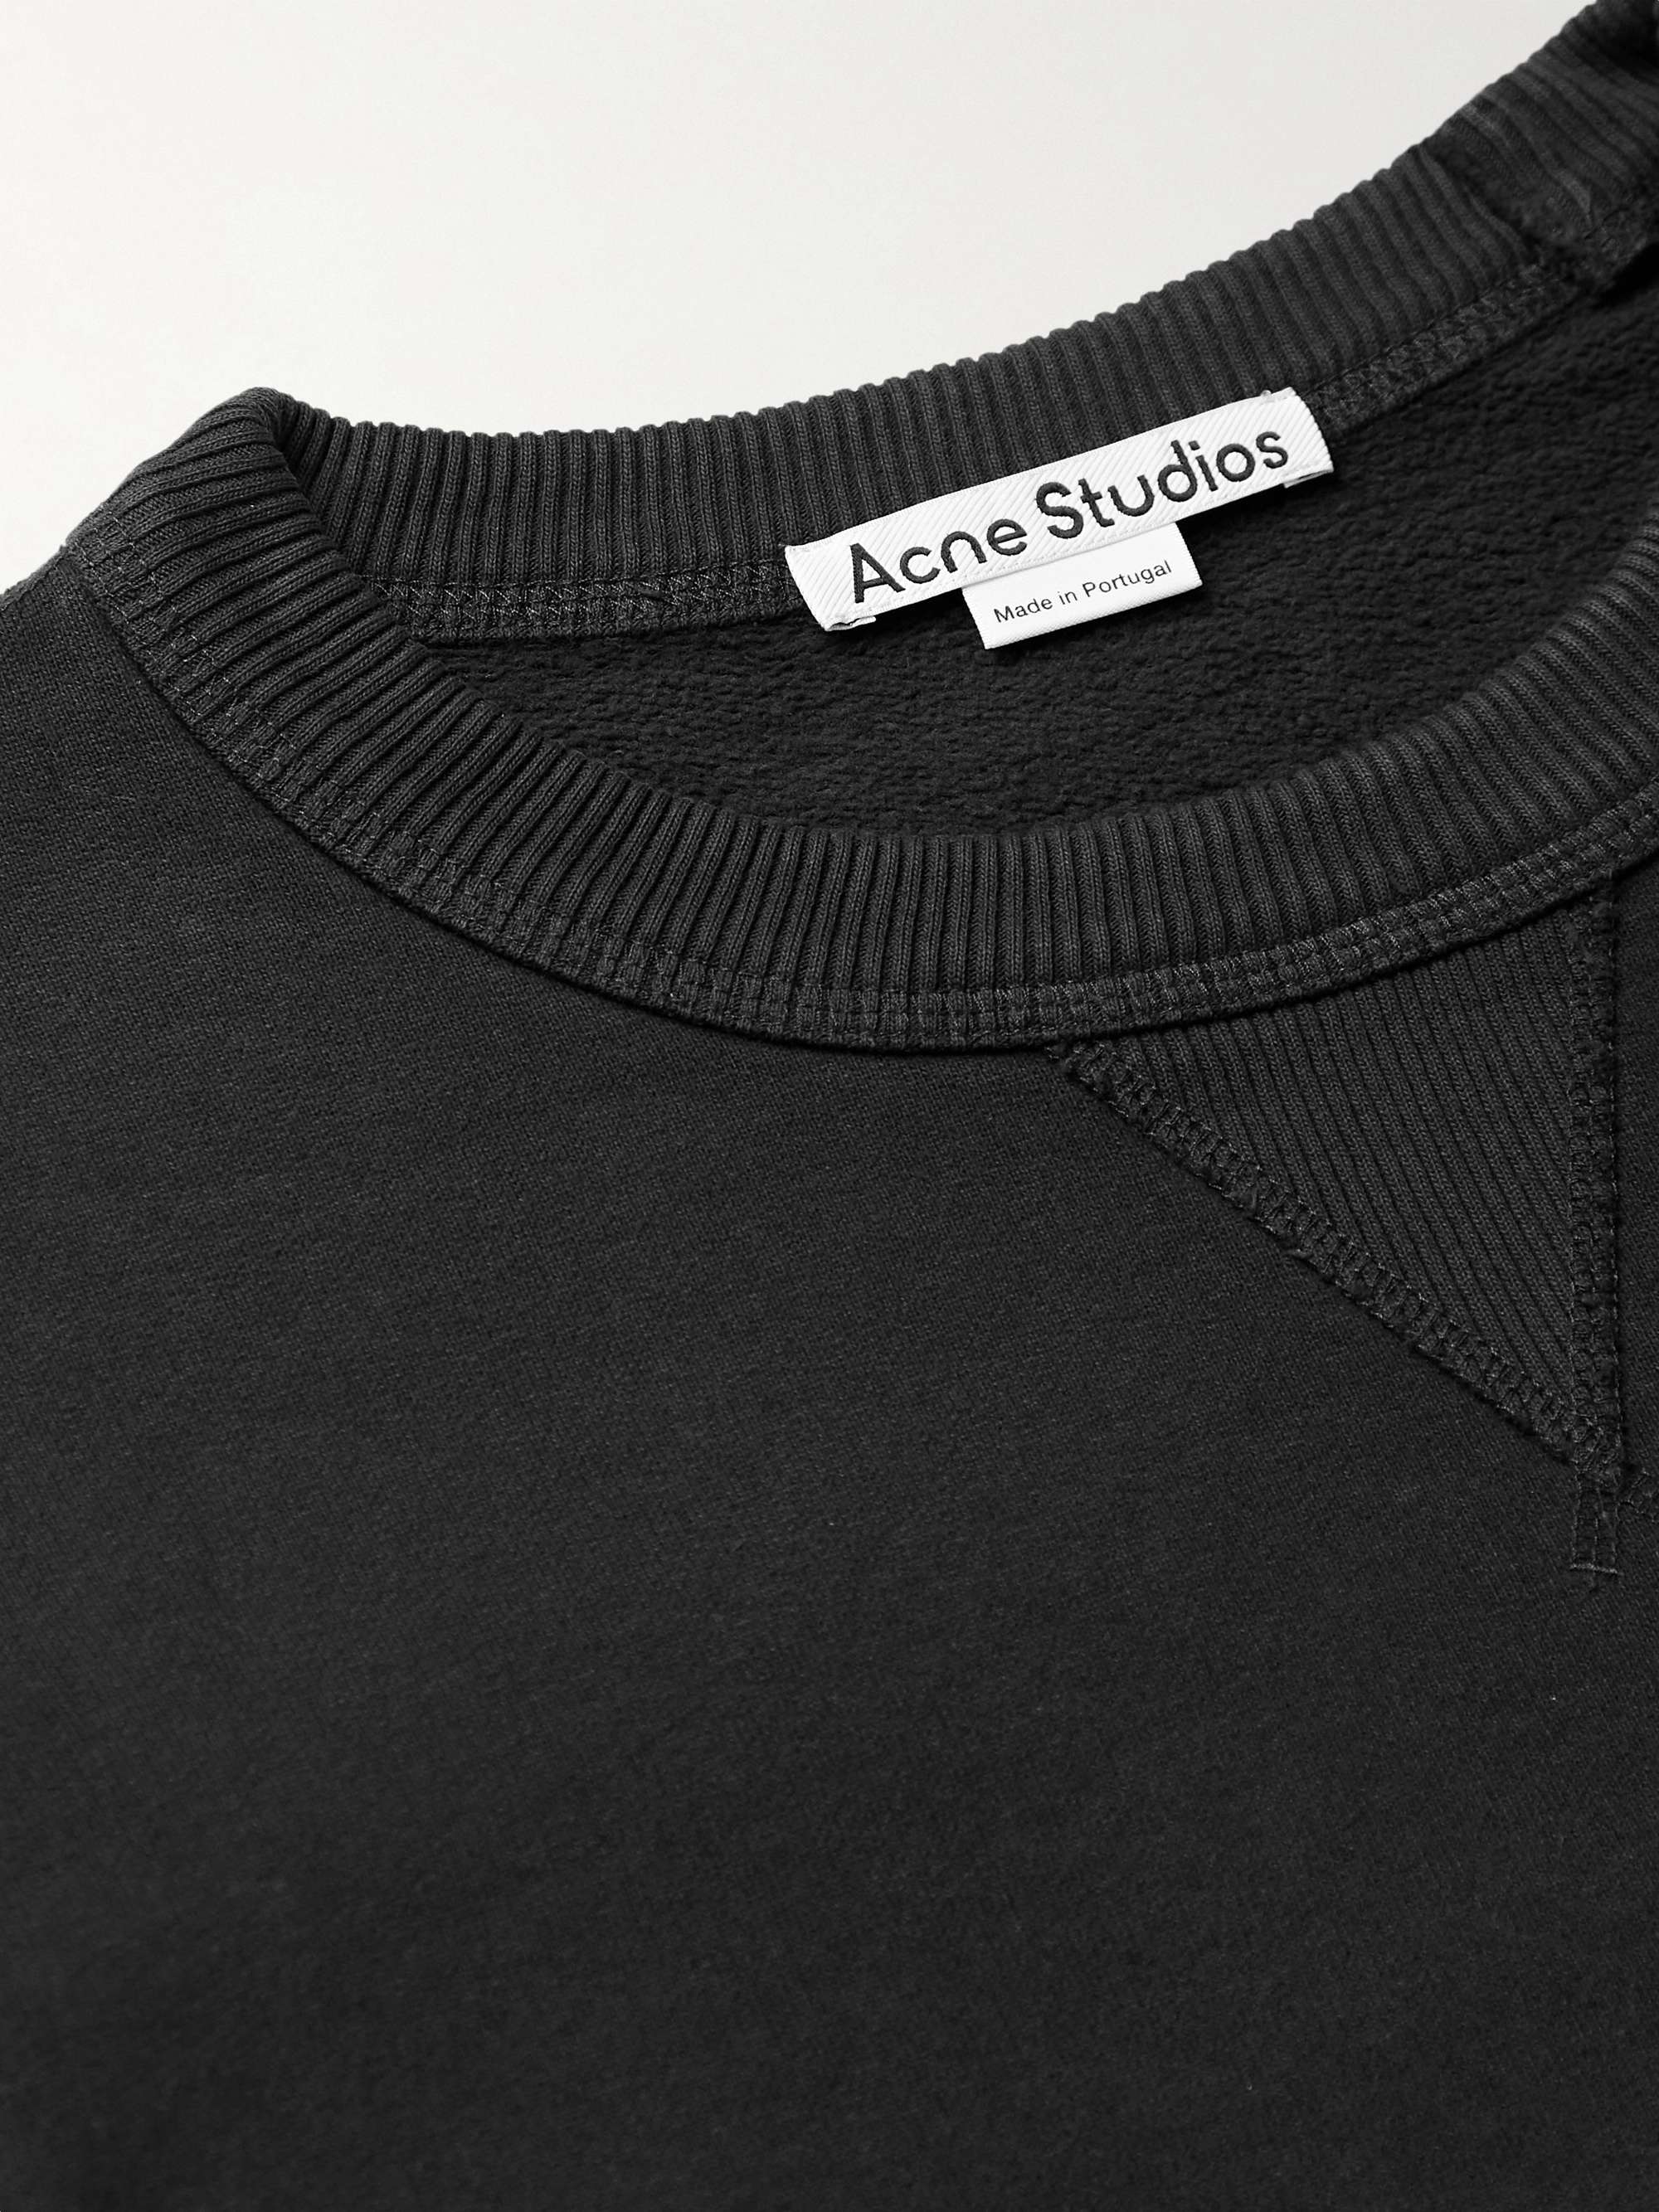 ACNE STUDIOS Logo-Print Cotton-Jersey Sweatshirt